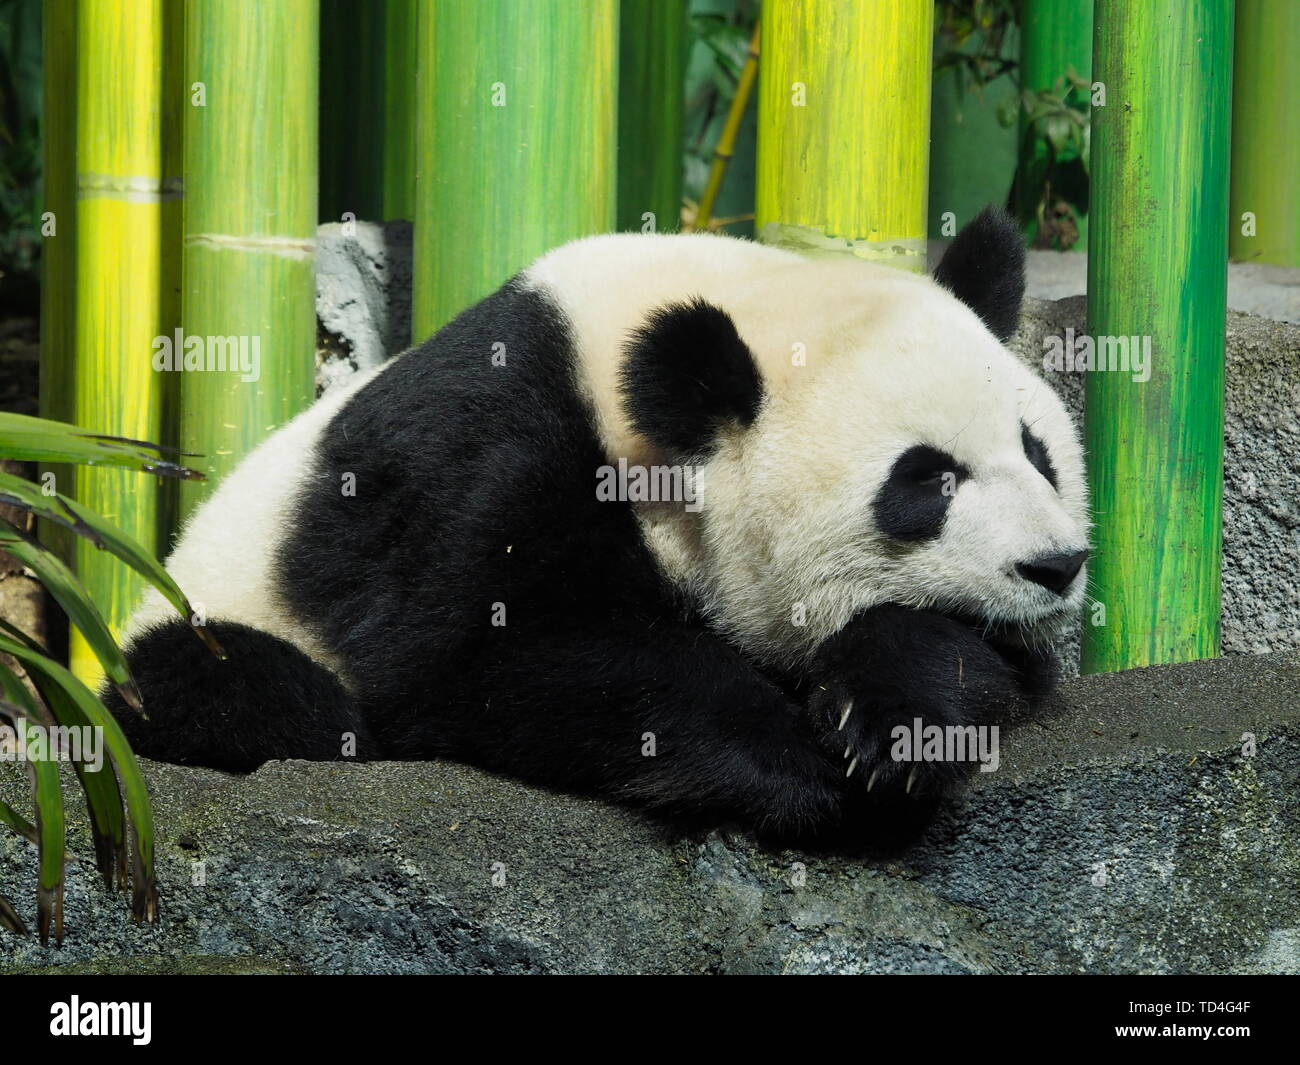 CALGARY, ALBERTA, CANADA - DECEMBER 29, 2018: A Giant Panda Bear (Ailuropoda melanoleuca) napping at the Calgary Zoo, Canada Stock Photo